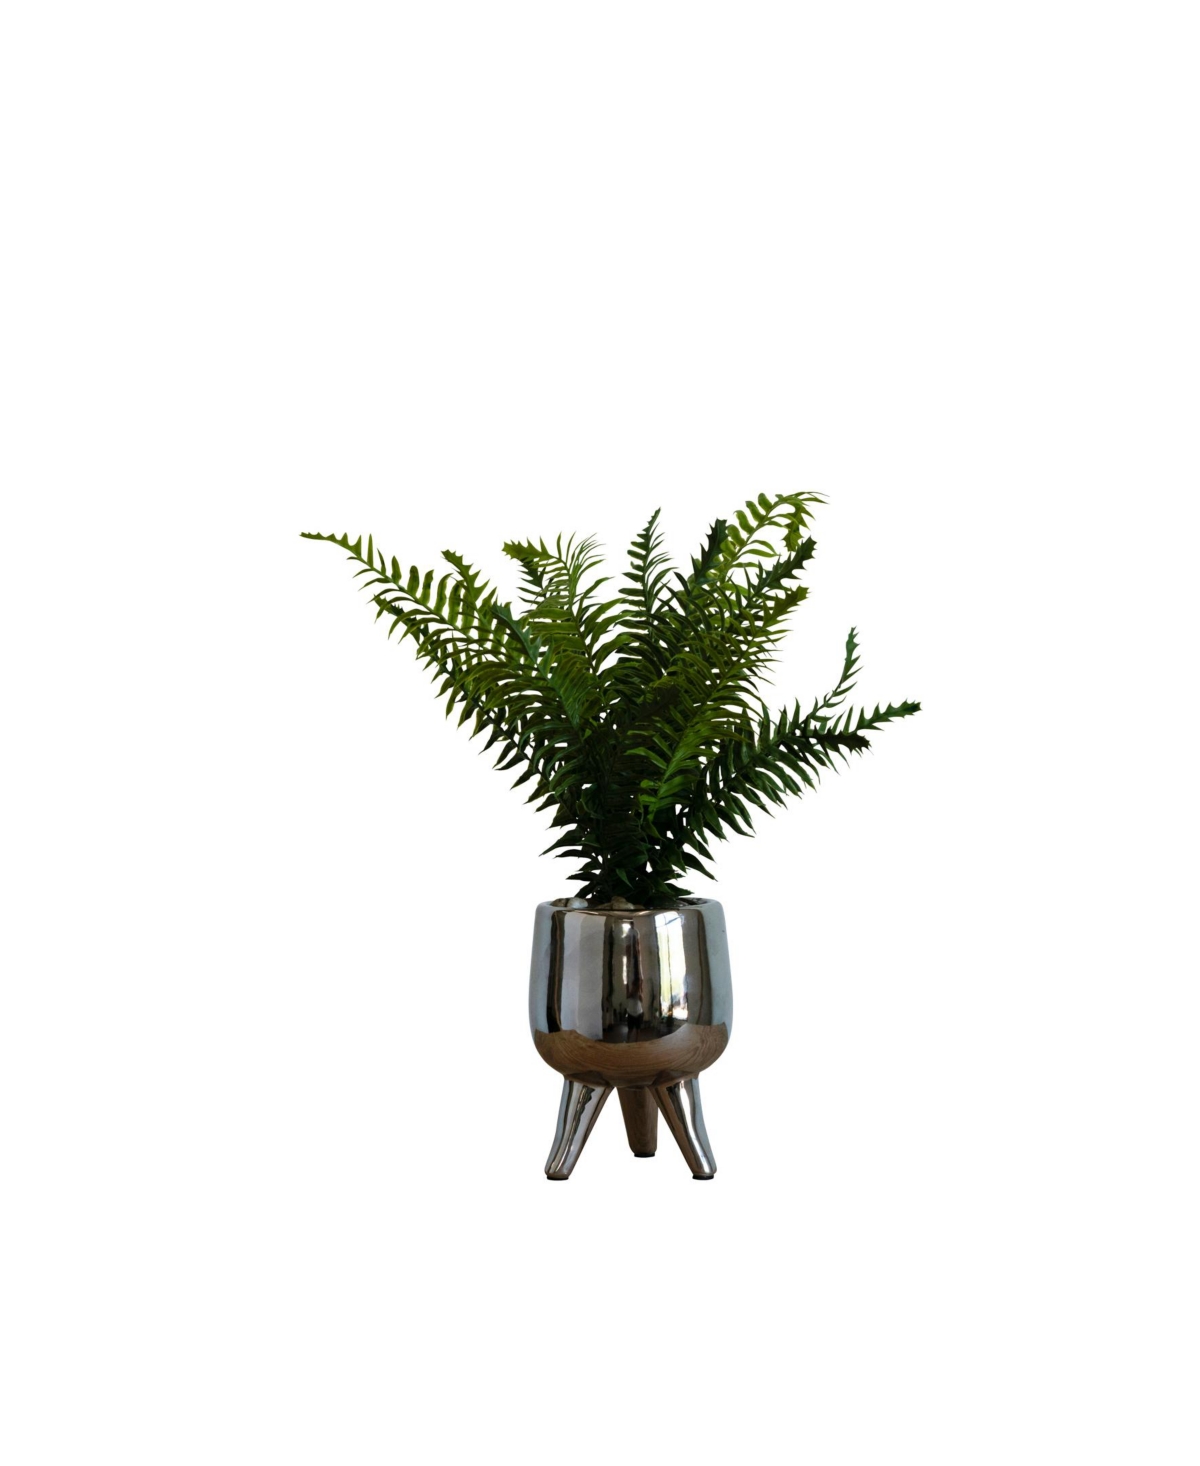 Desktop Artificial Palm in Decorative Ceramic Pot, 17" - Silver-Tone